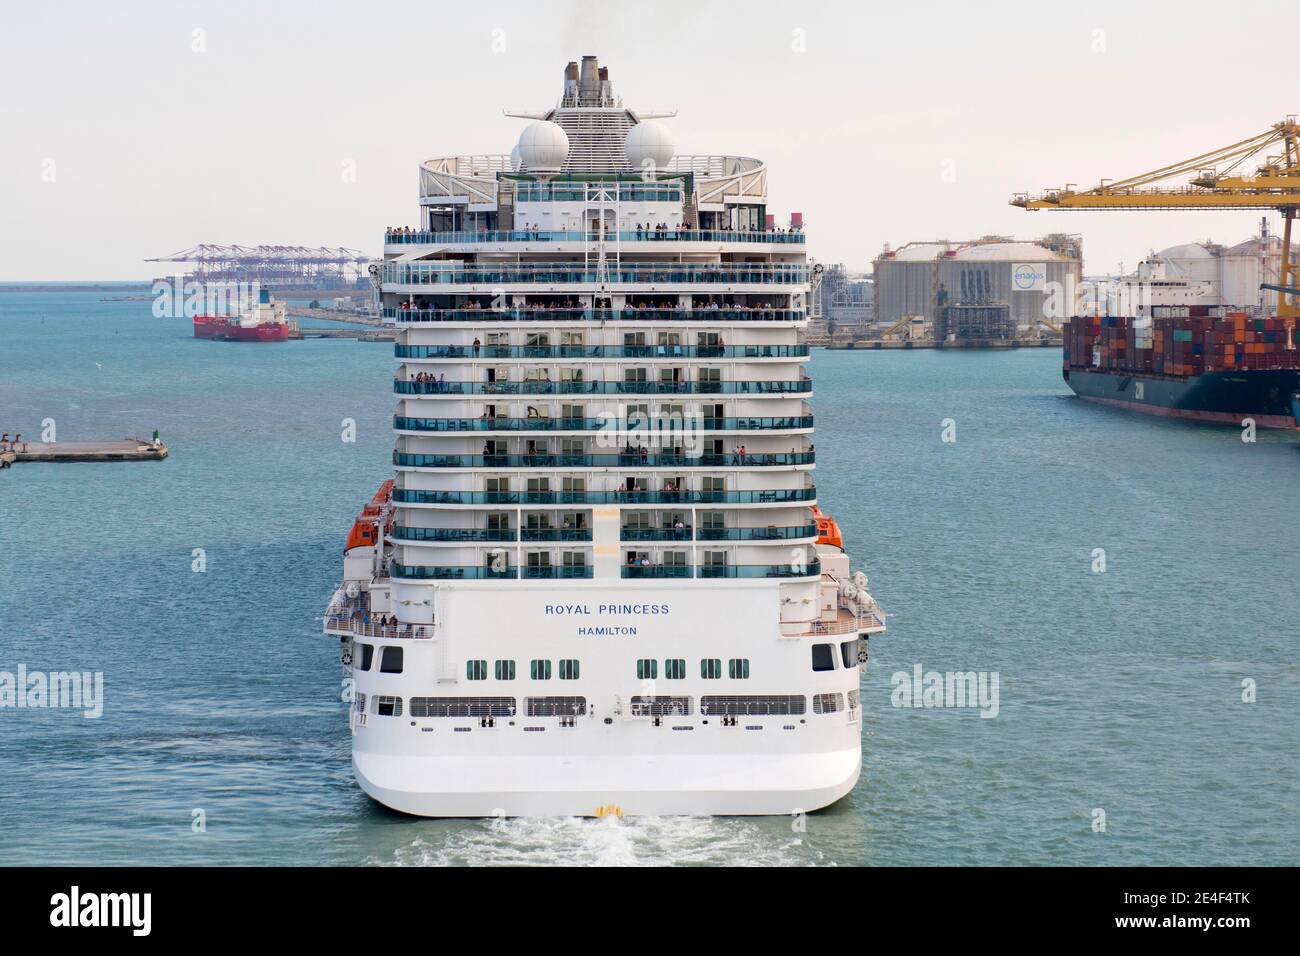 The Royal Princess cruise ship in Barcelona, Spain. The ship is operated by Princess Cruises, a subsidiary of Carnival Corporation. Stock Photo